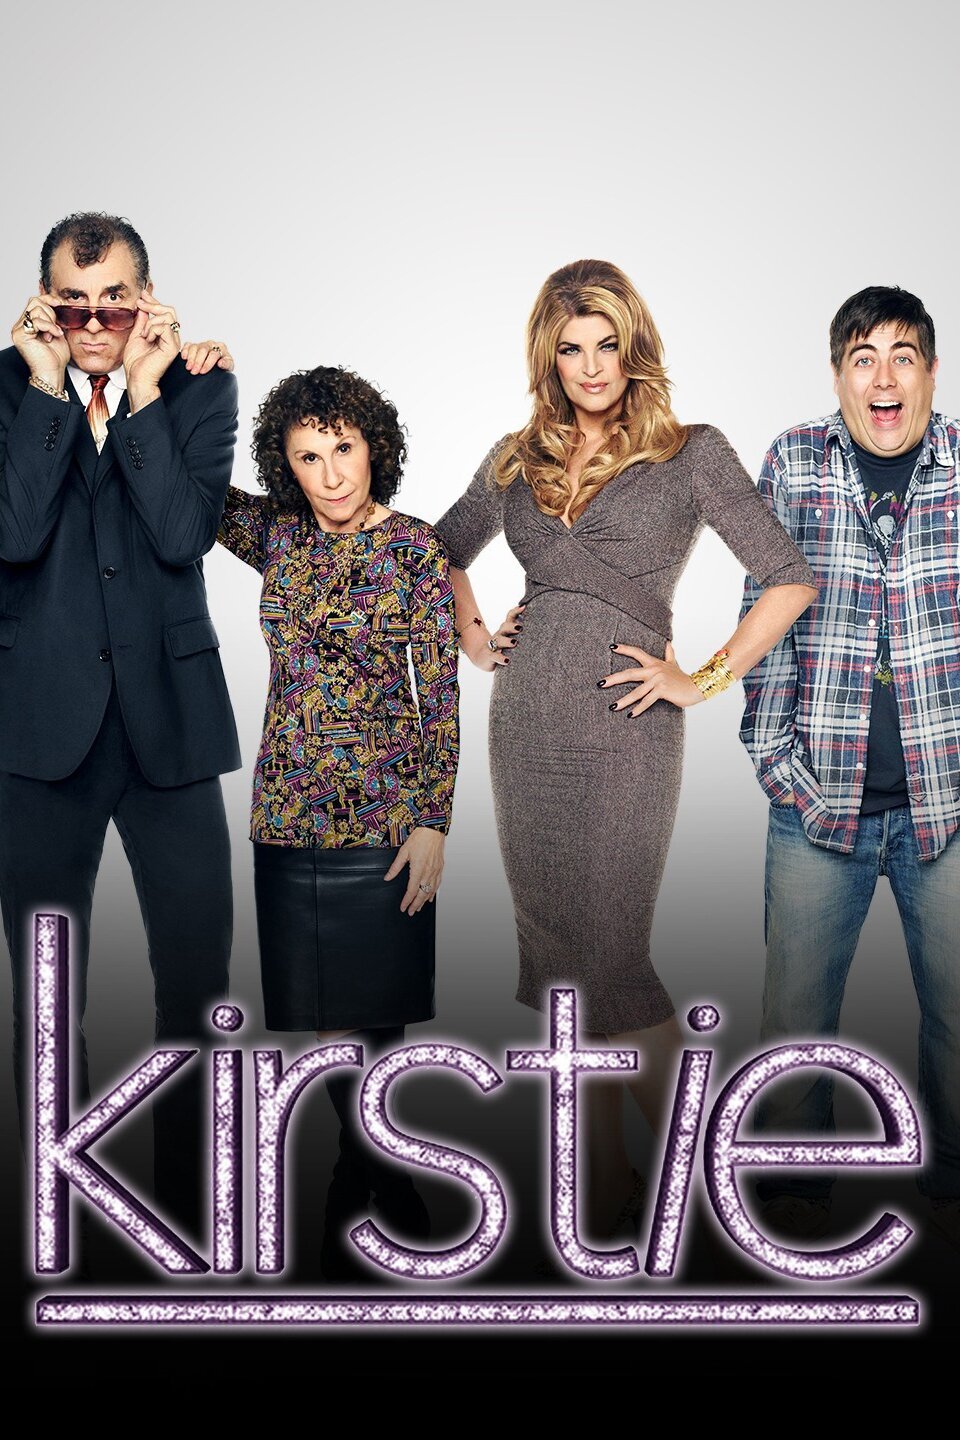 Kirstie (Comedyserie met Kirstie Alley) Repost afl. 1